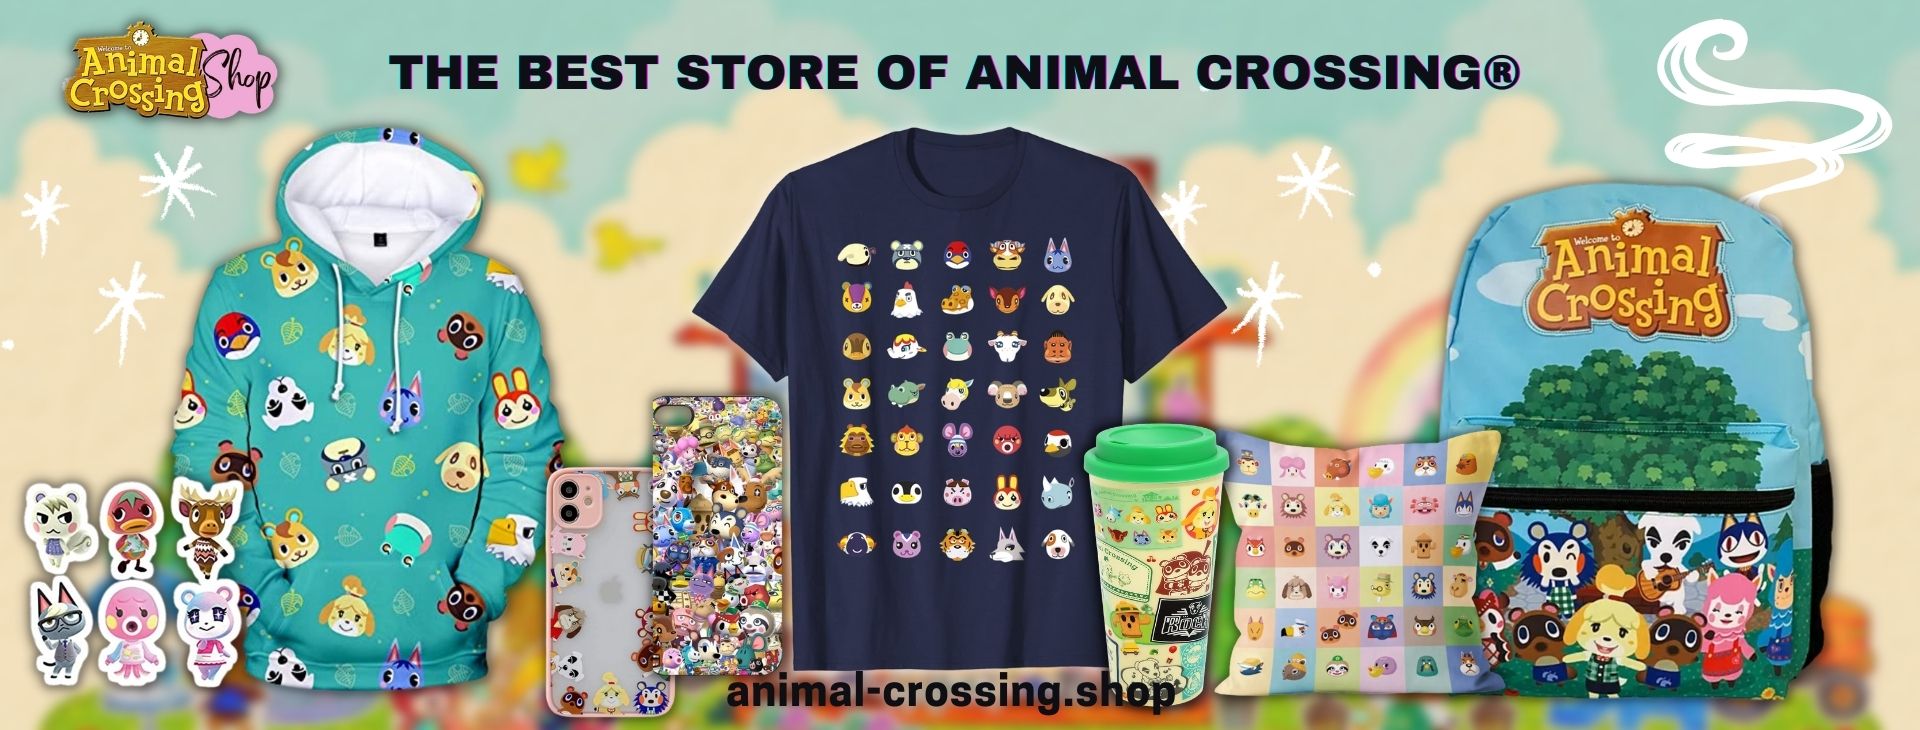 Animal Crossing Shop Banner - Animal Crossing Shop